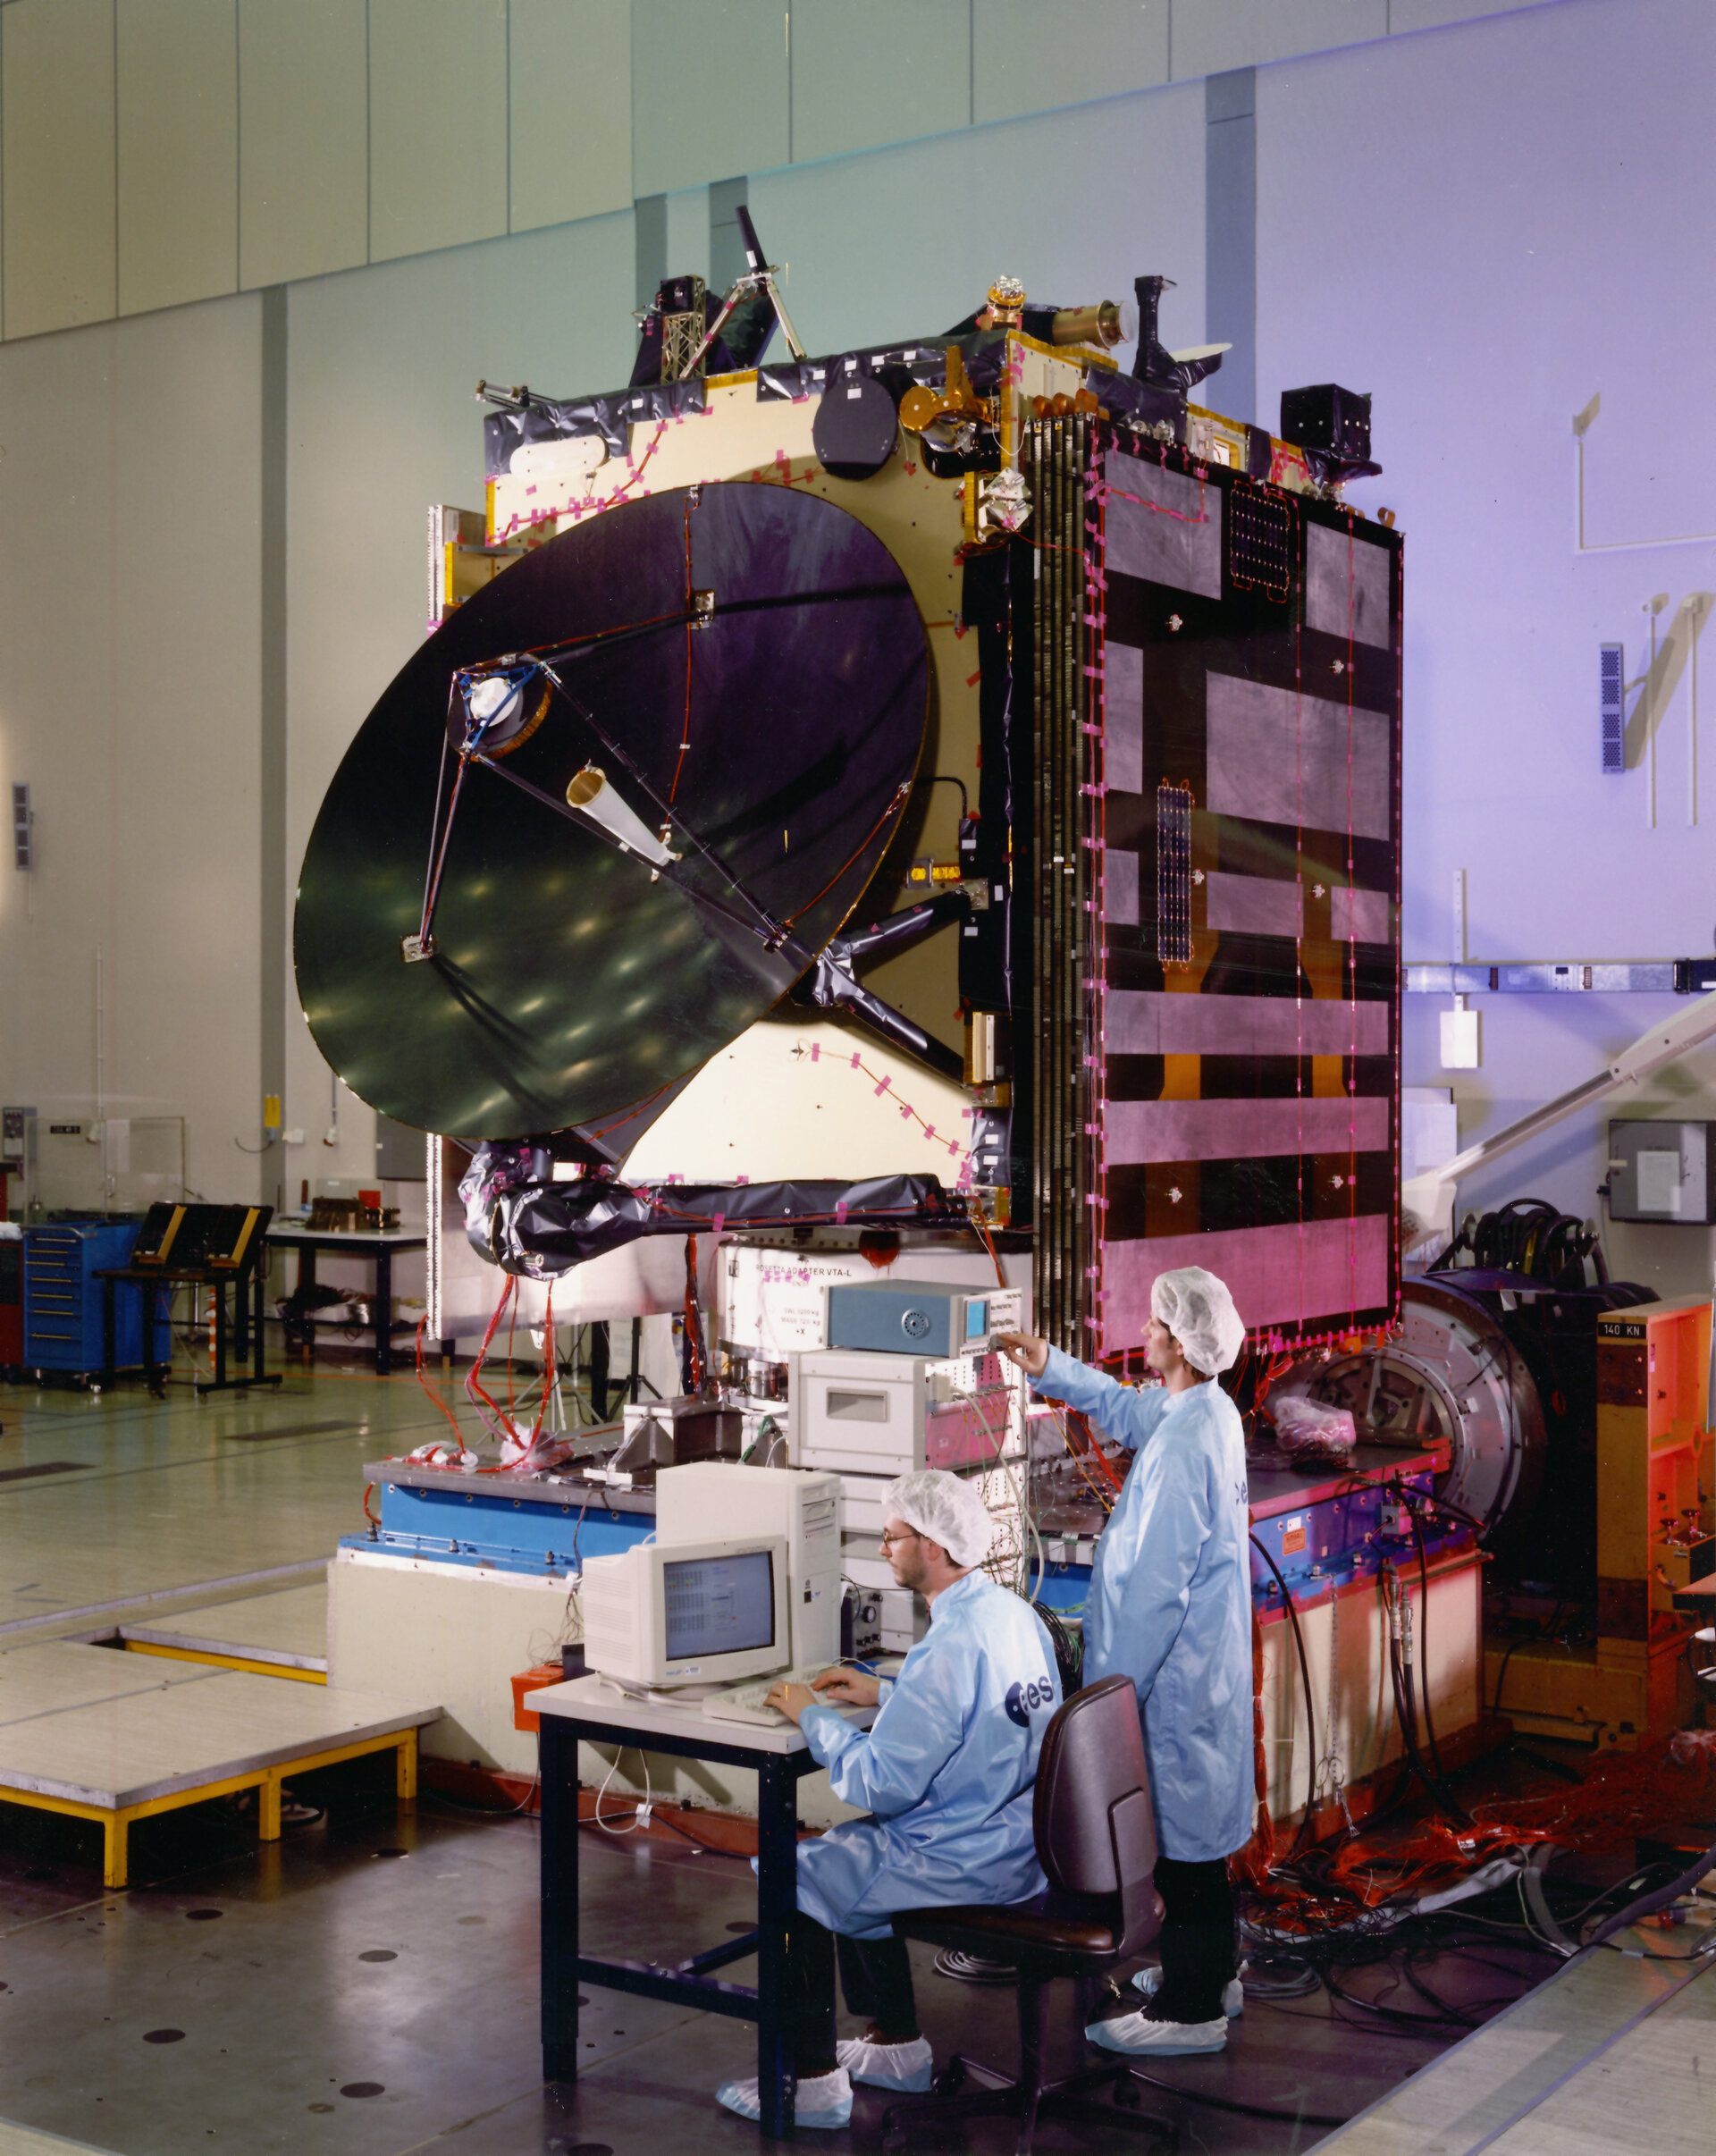 Rosetta vibration testing in 2000